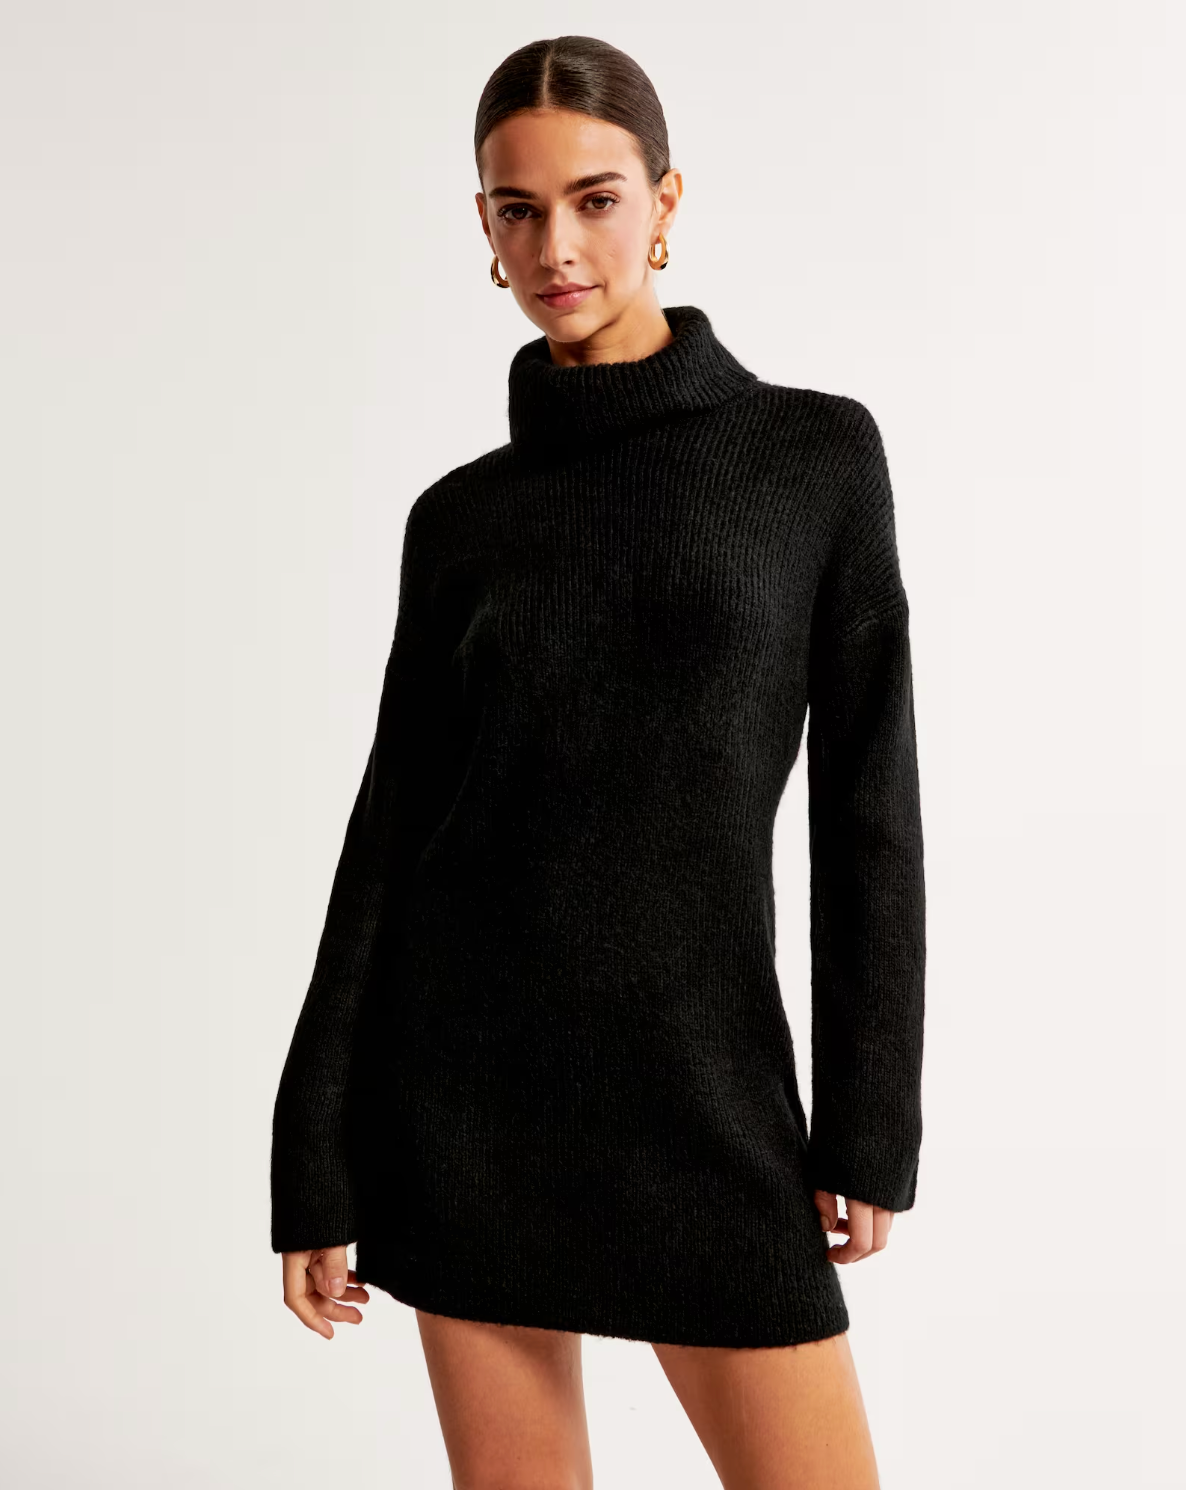 Wherever You Go Black Turtleneck Sweater Dress – Shop the Mint